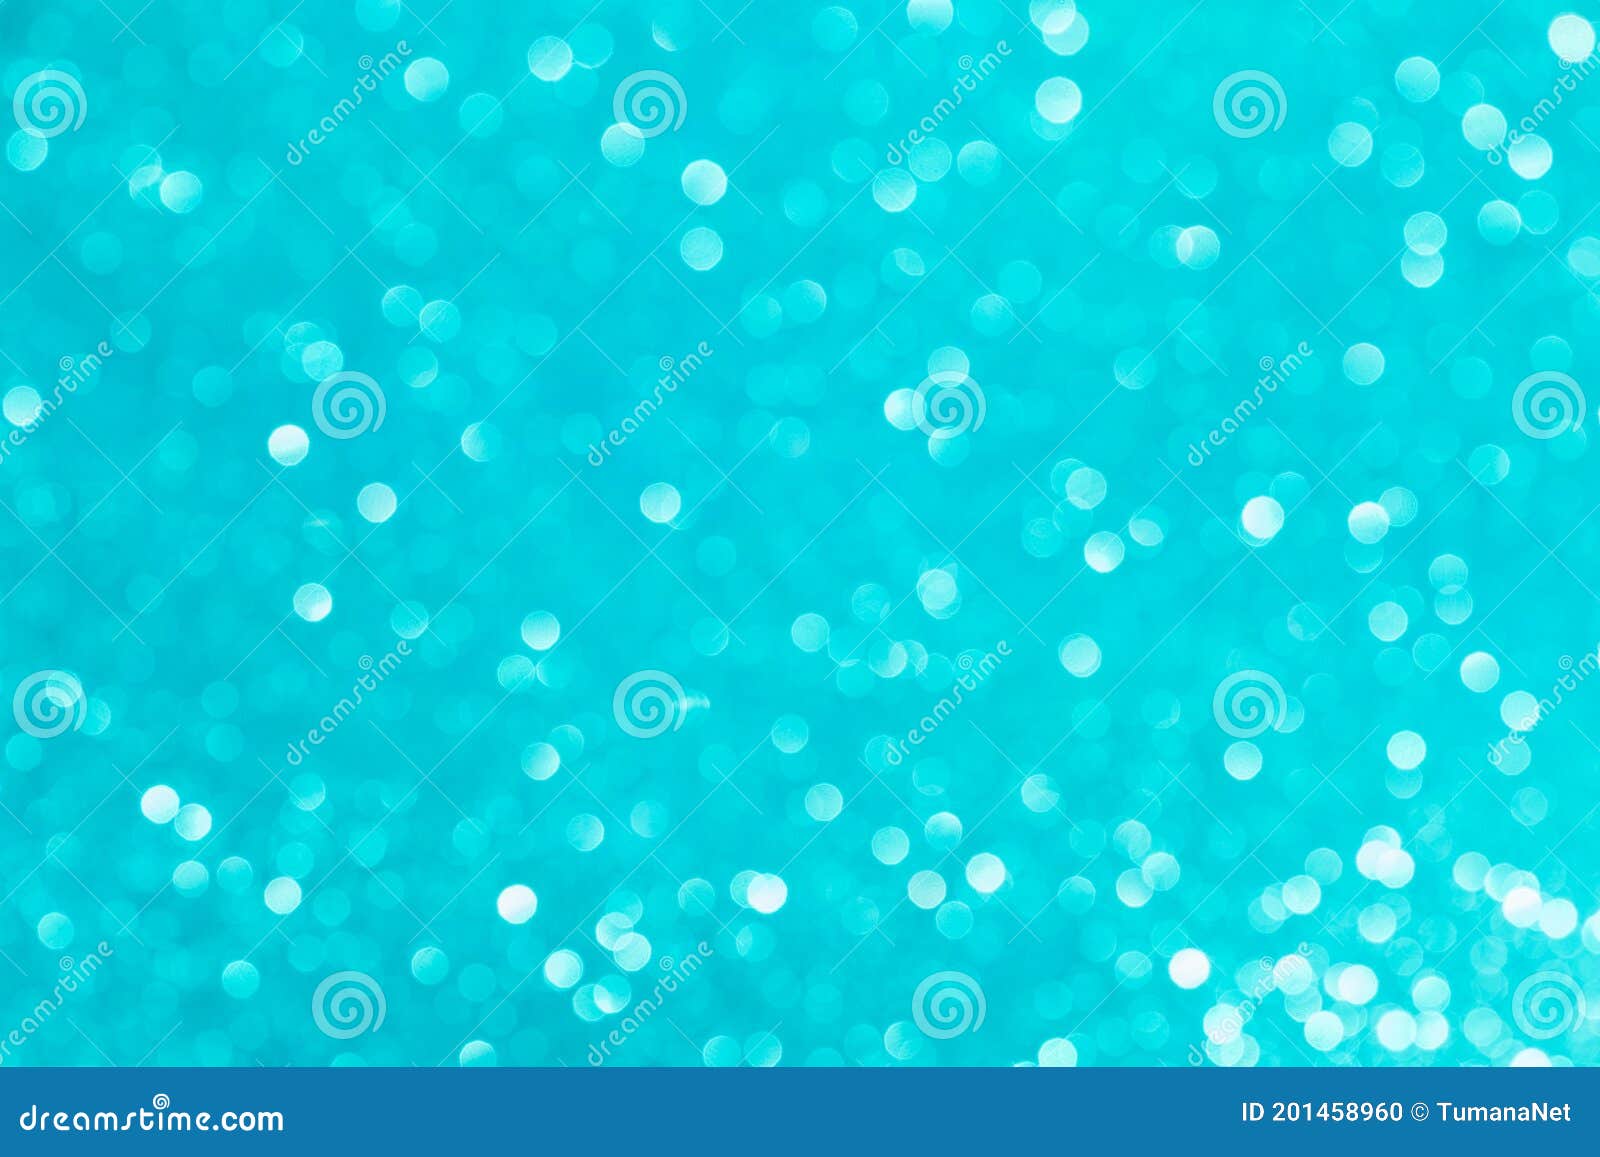 150 Best Aqua ideas | aqua, aqua turquoise, shades of turquoise